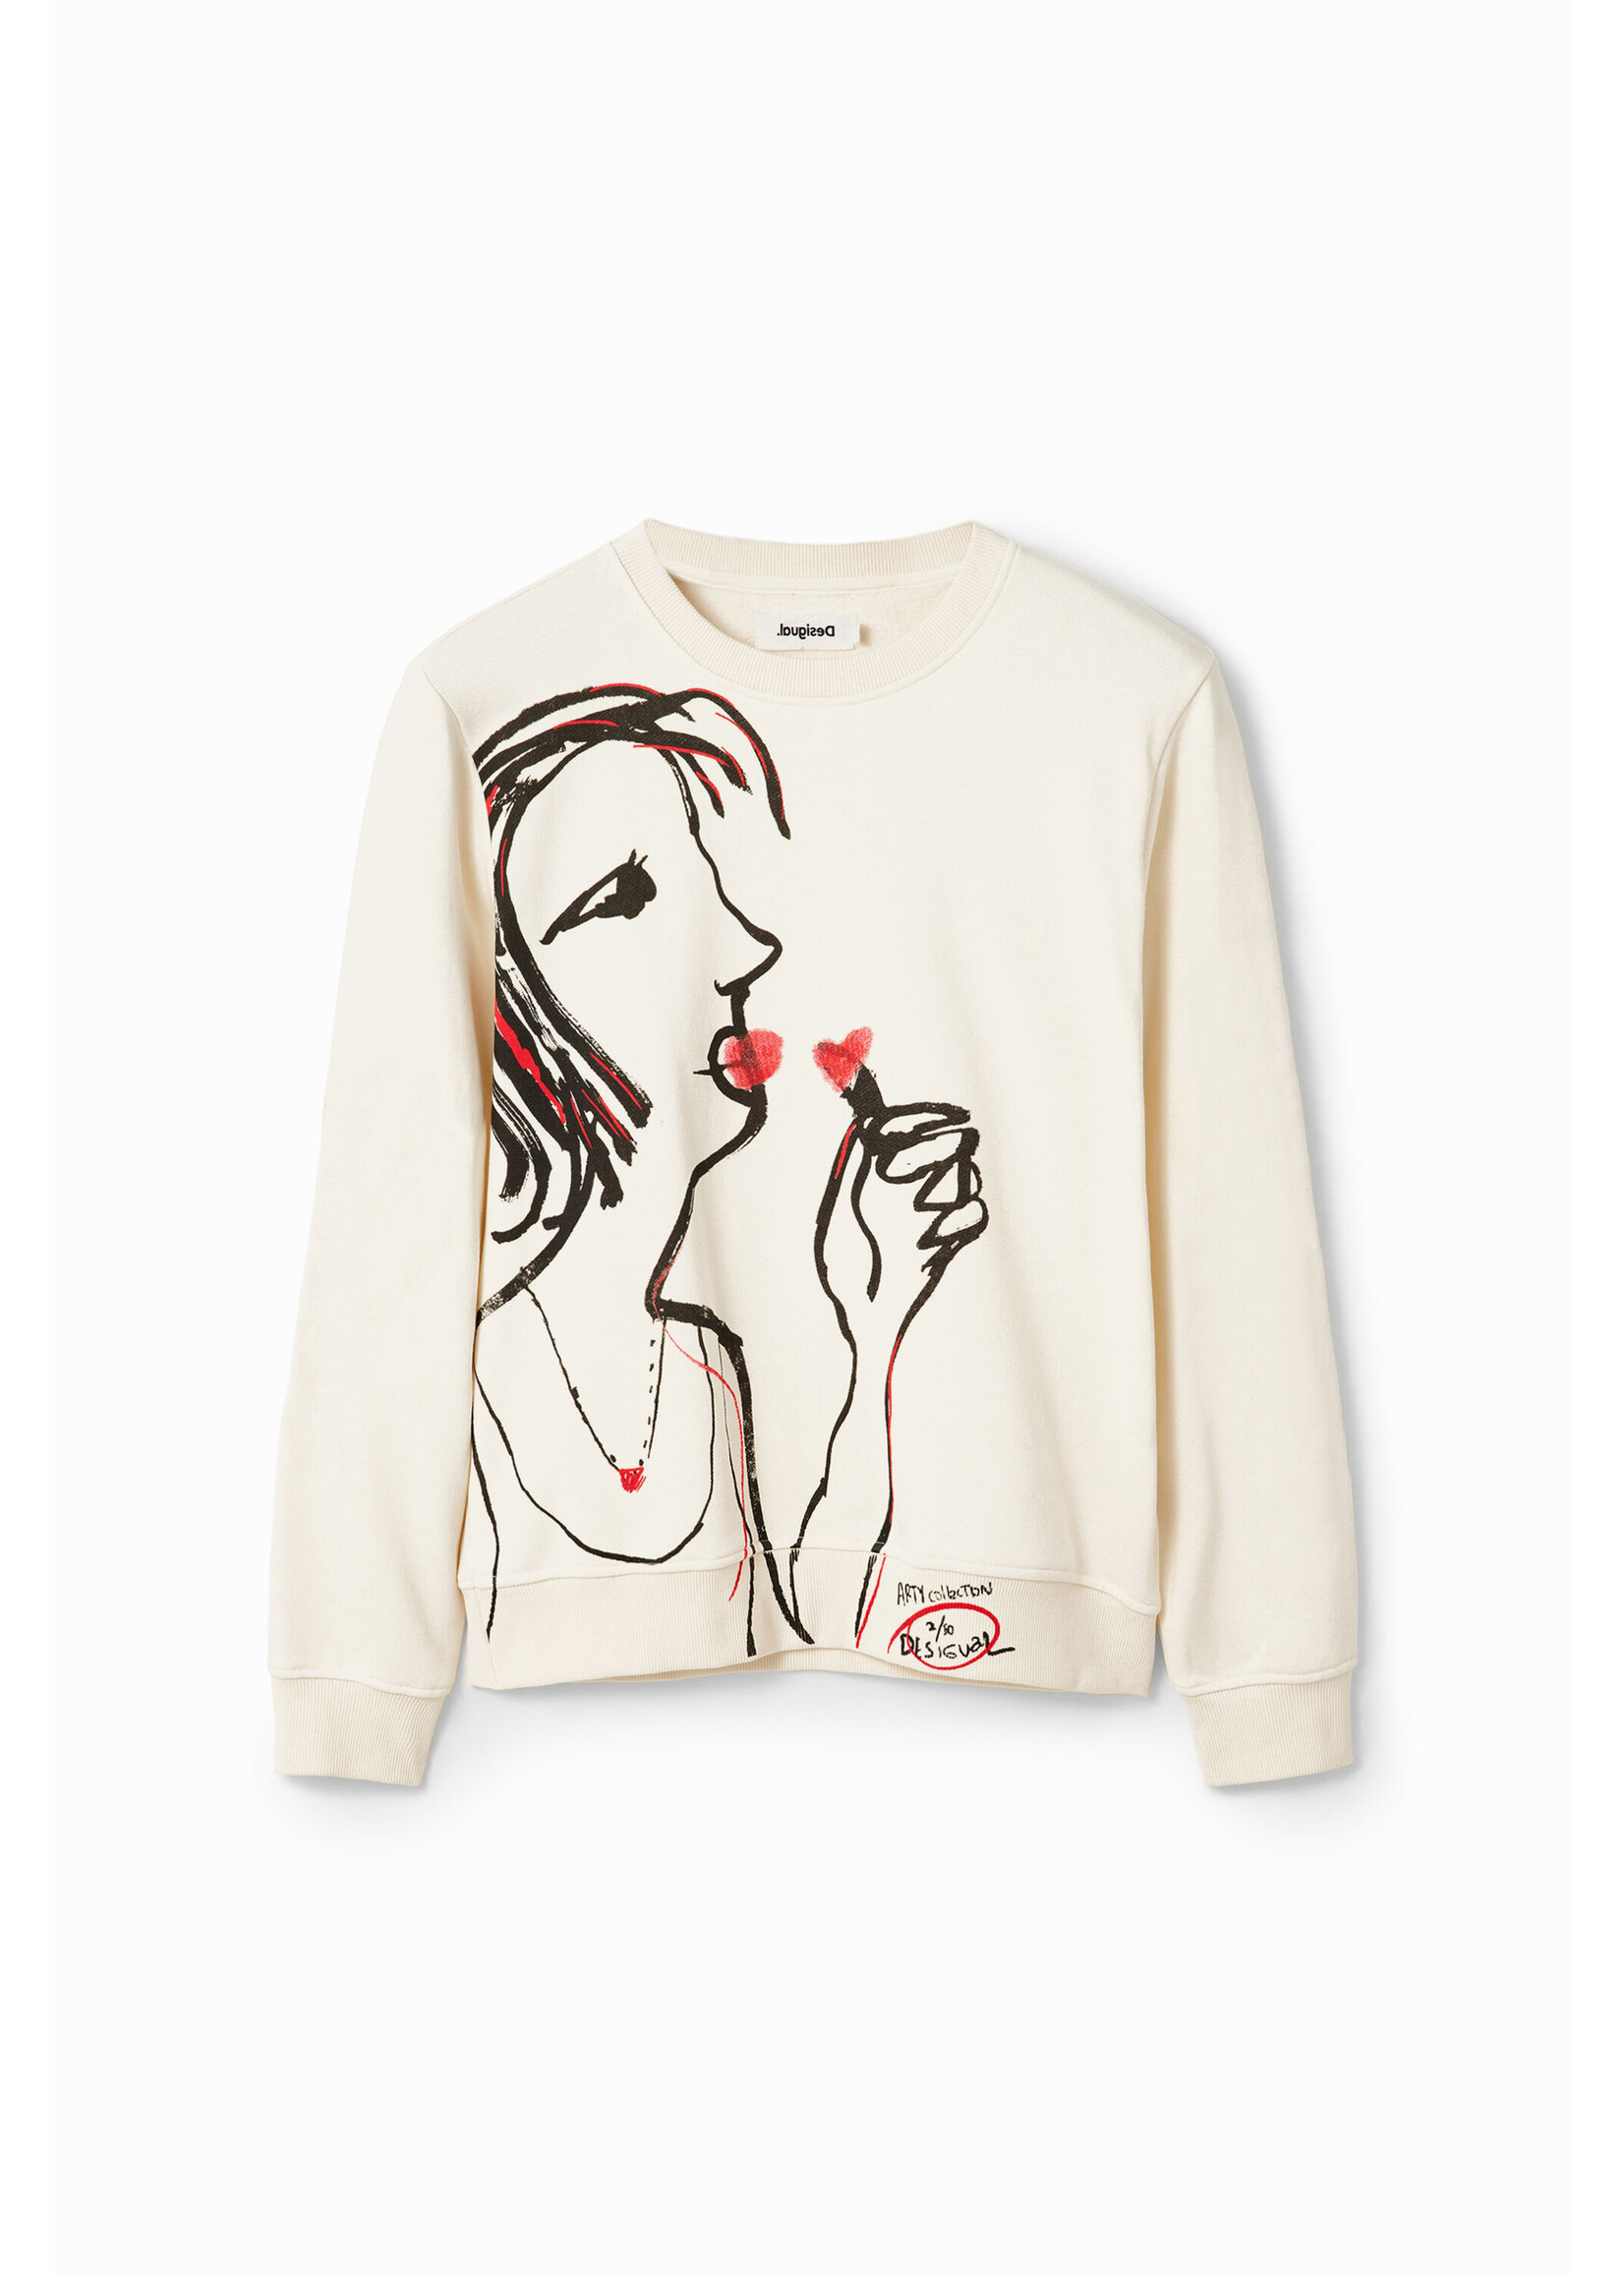 DESIGUAL Women's arty illustration sweatshirt